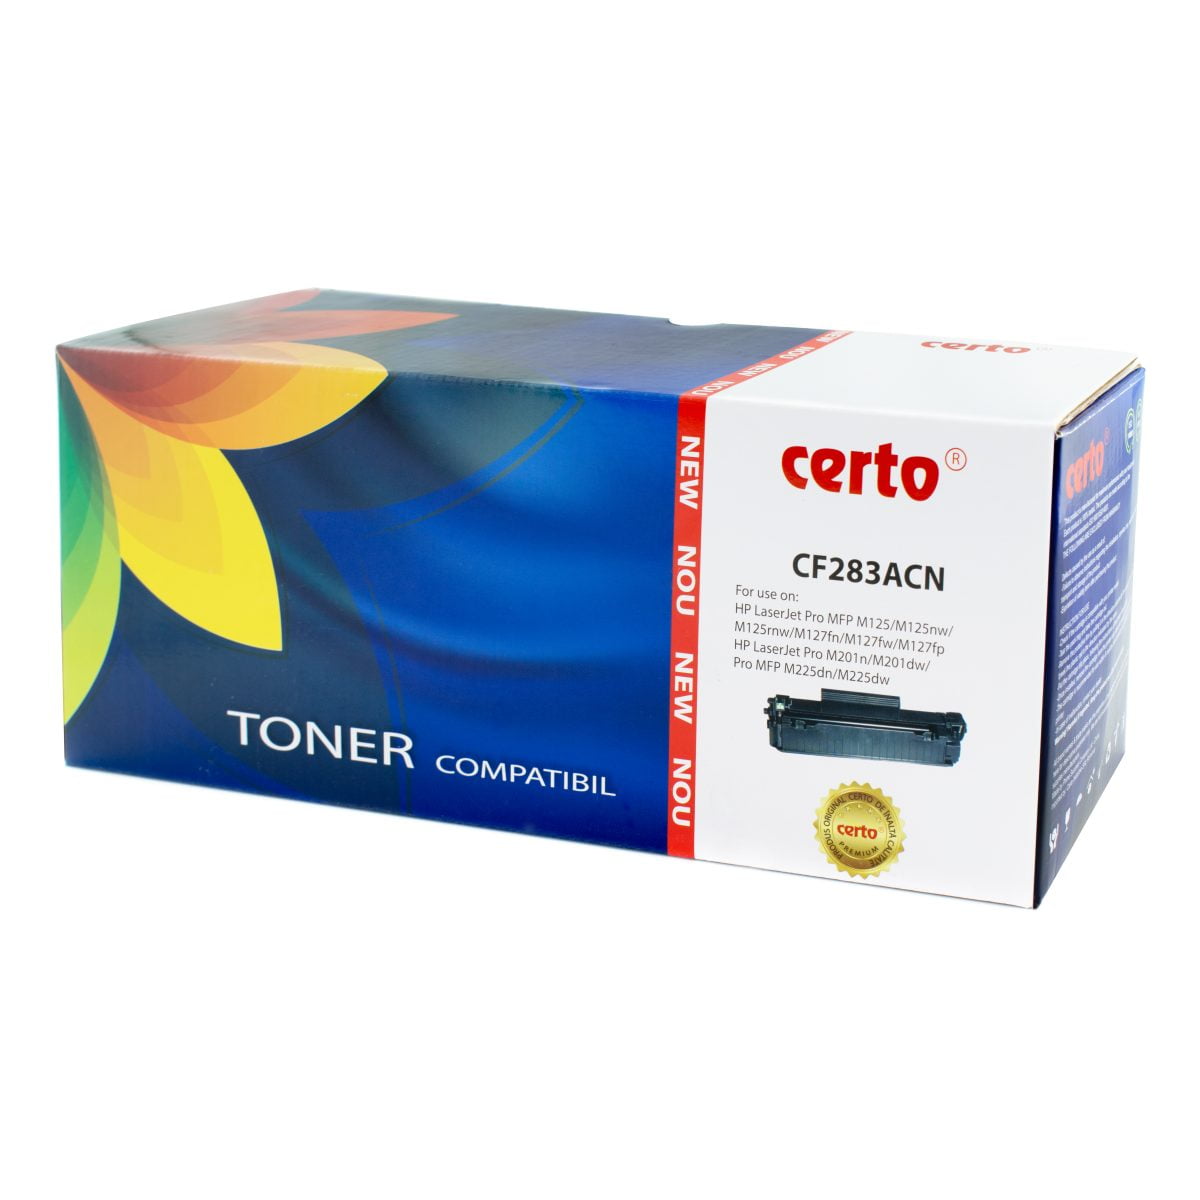 Toner compatibil CERTO NEW CF283A 1,5K HP LASERJET PRO M125NW